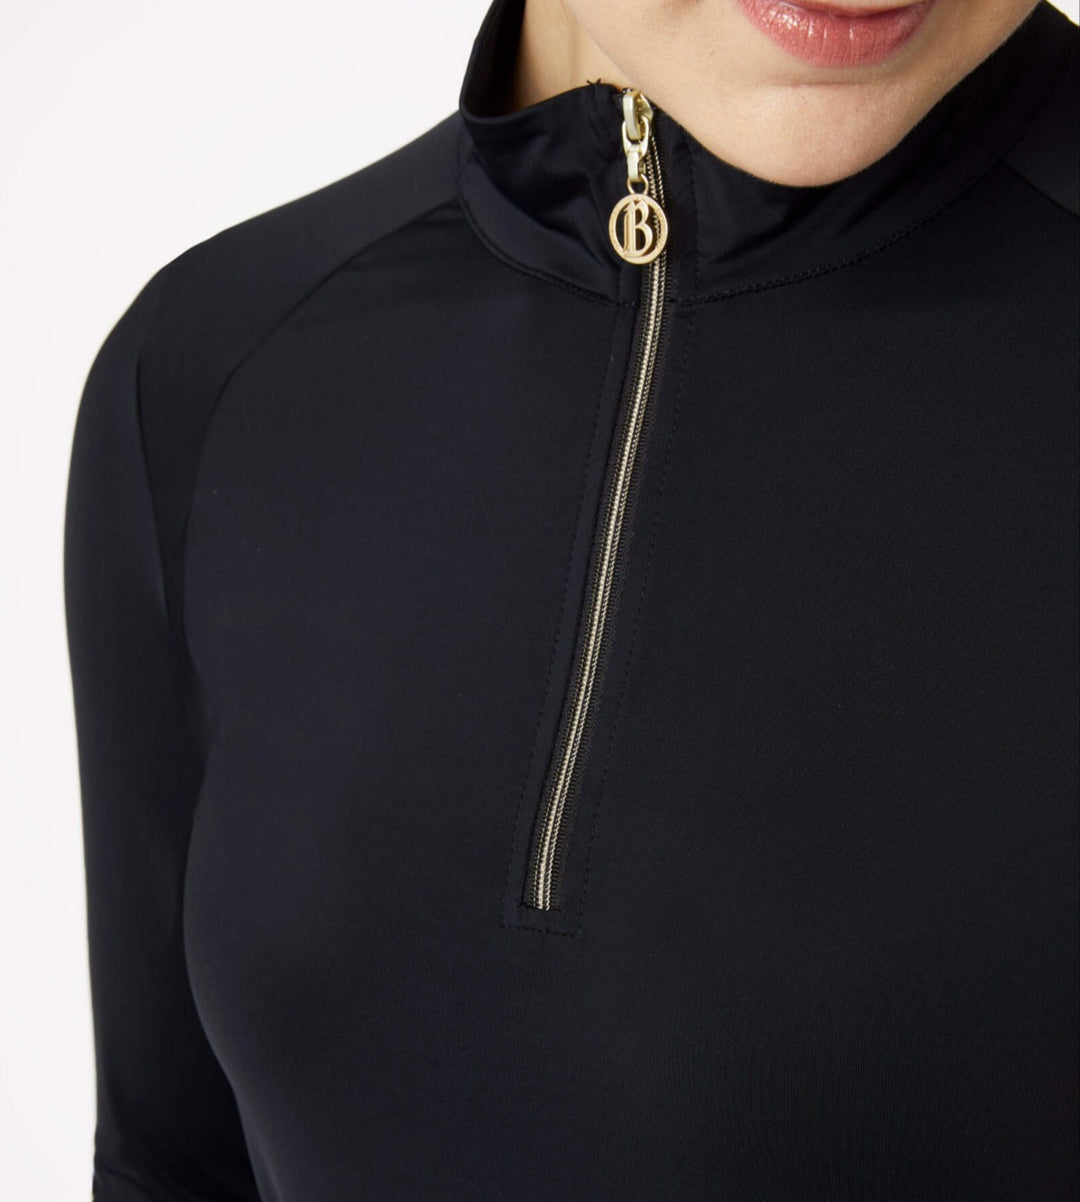 B Vertigo Sidney Women's Long Sleeved Ventilated Half Zip Shirt, Anthracite Gray